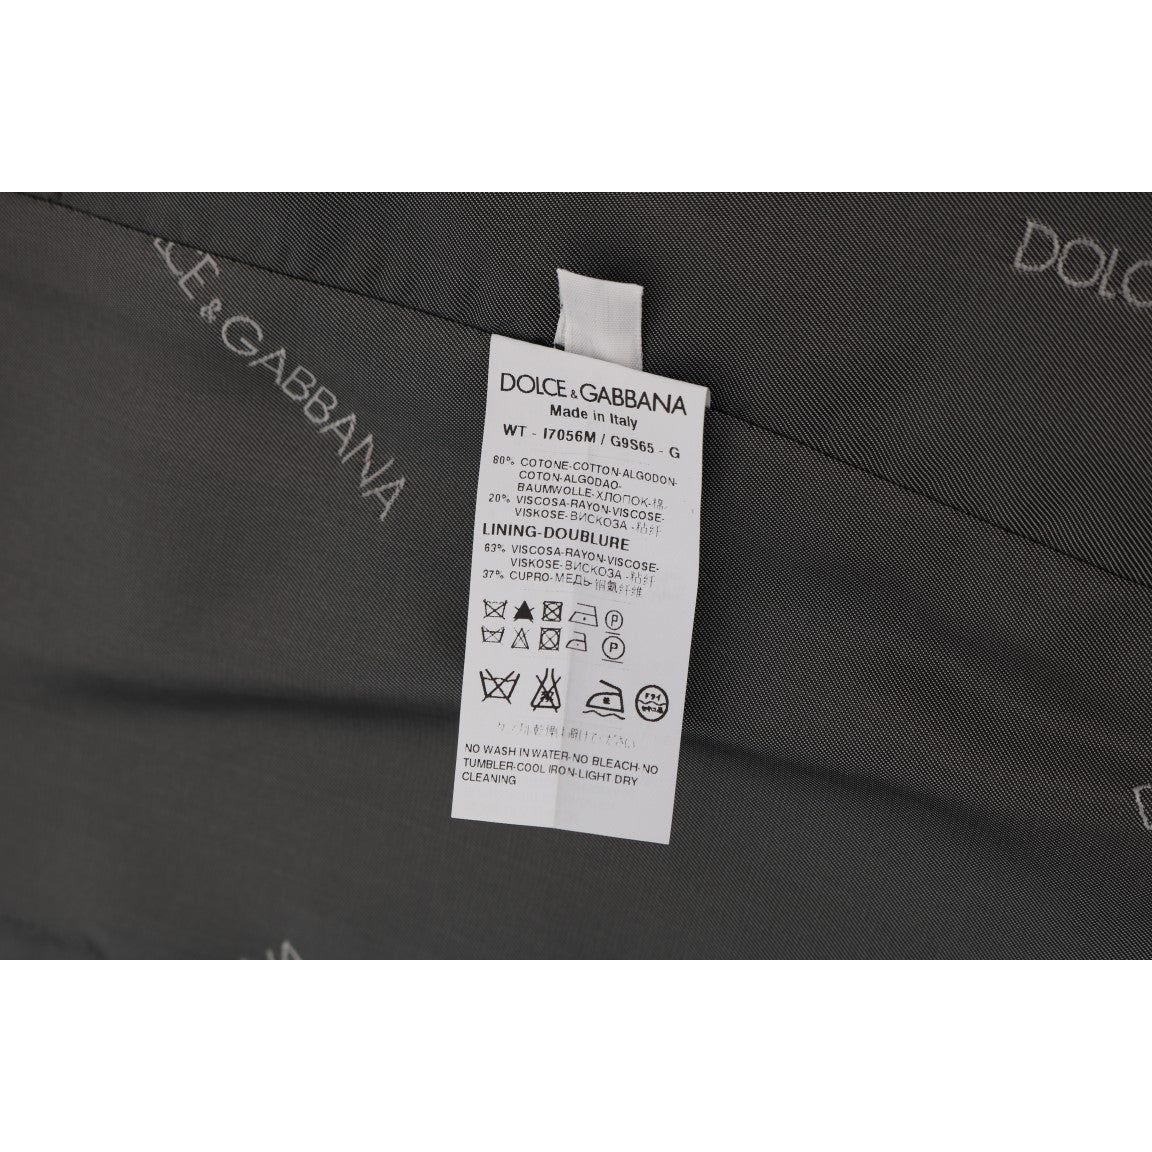 Dolce & Gabbana Sleek Gray Single-Breasted Waistcoat Vest gray-staff-cotton-rayon-vest-2 498757-gray-staff-cotton-rayon-vest-3-6.jpg